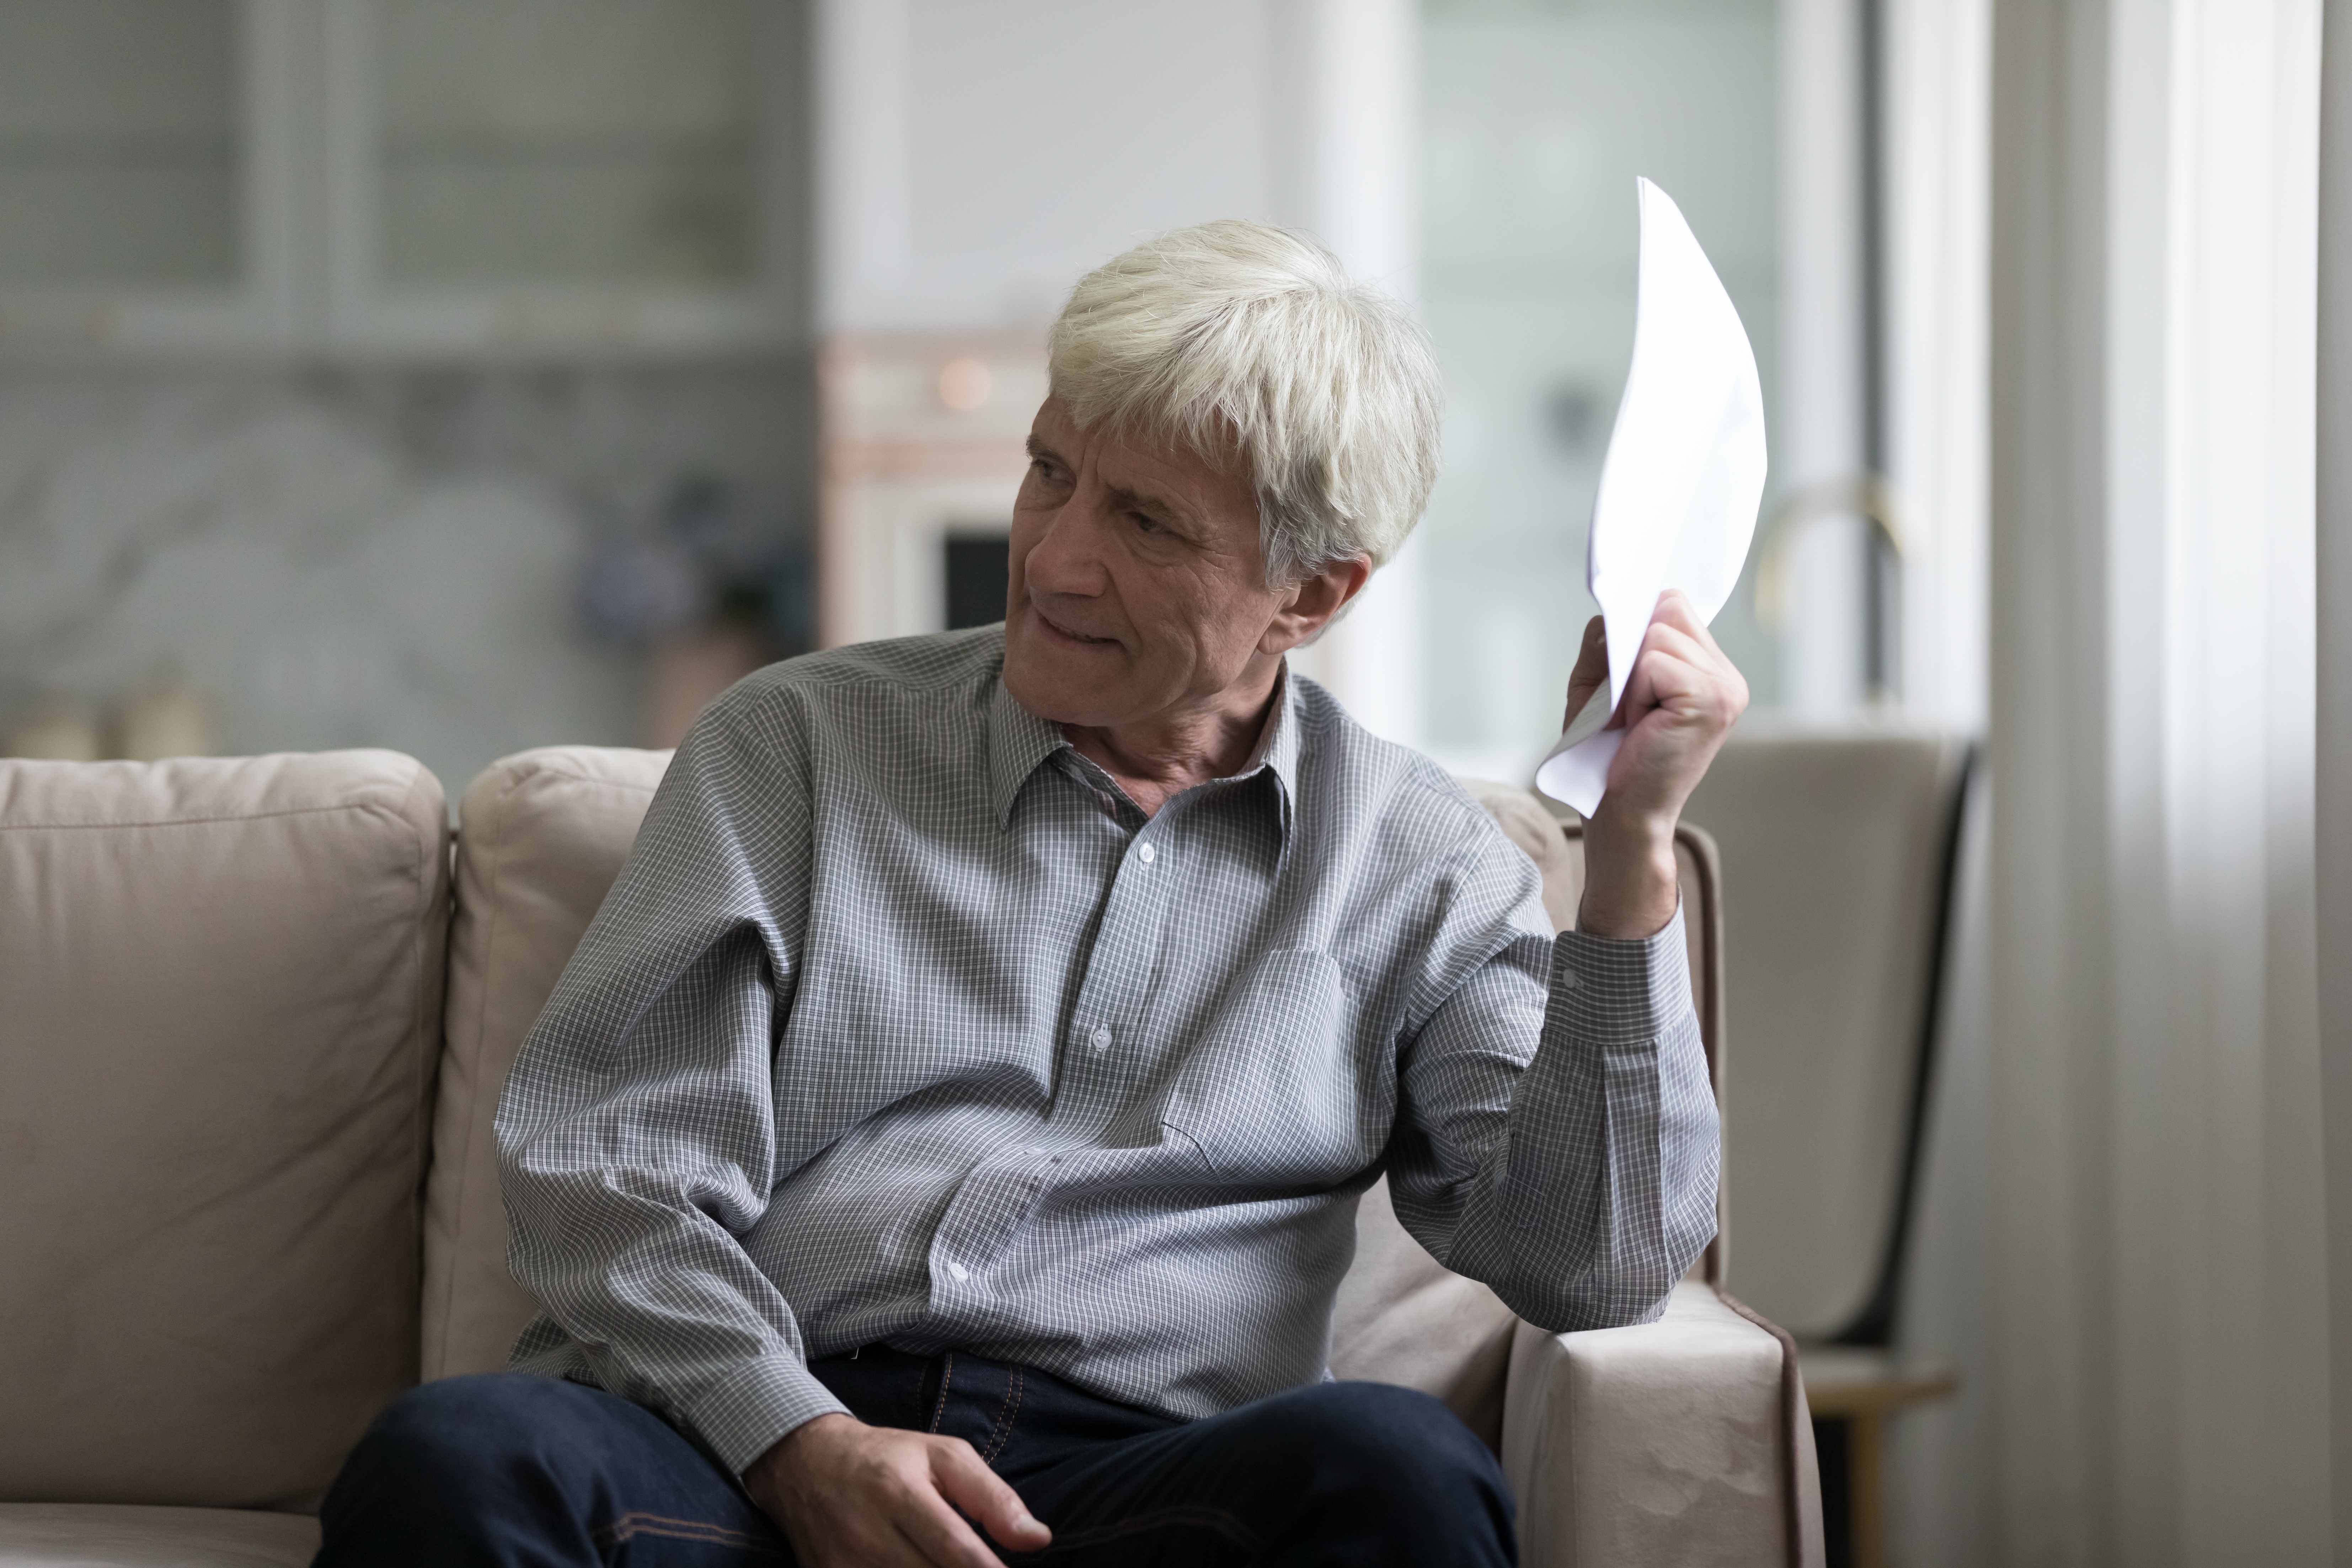 An elderly man looking concerned | Source: Shutterstock